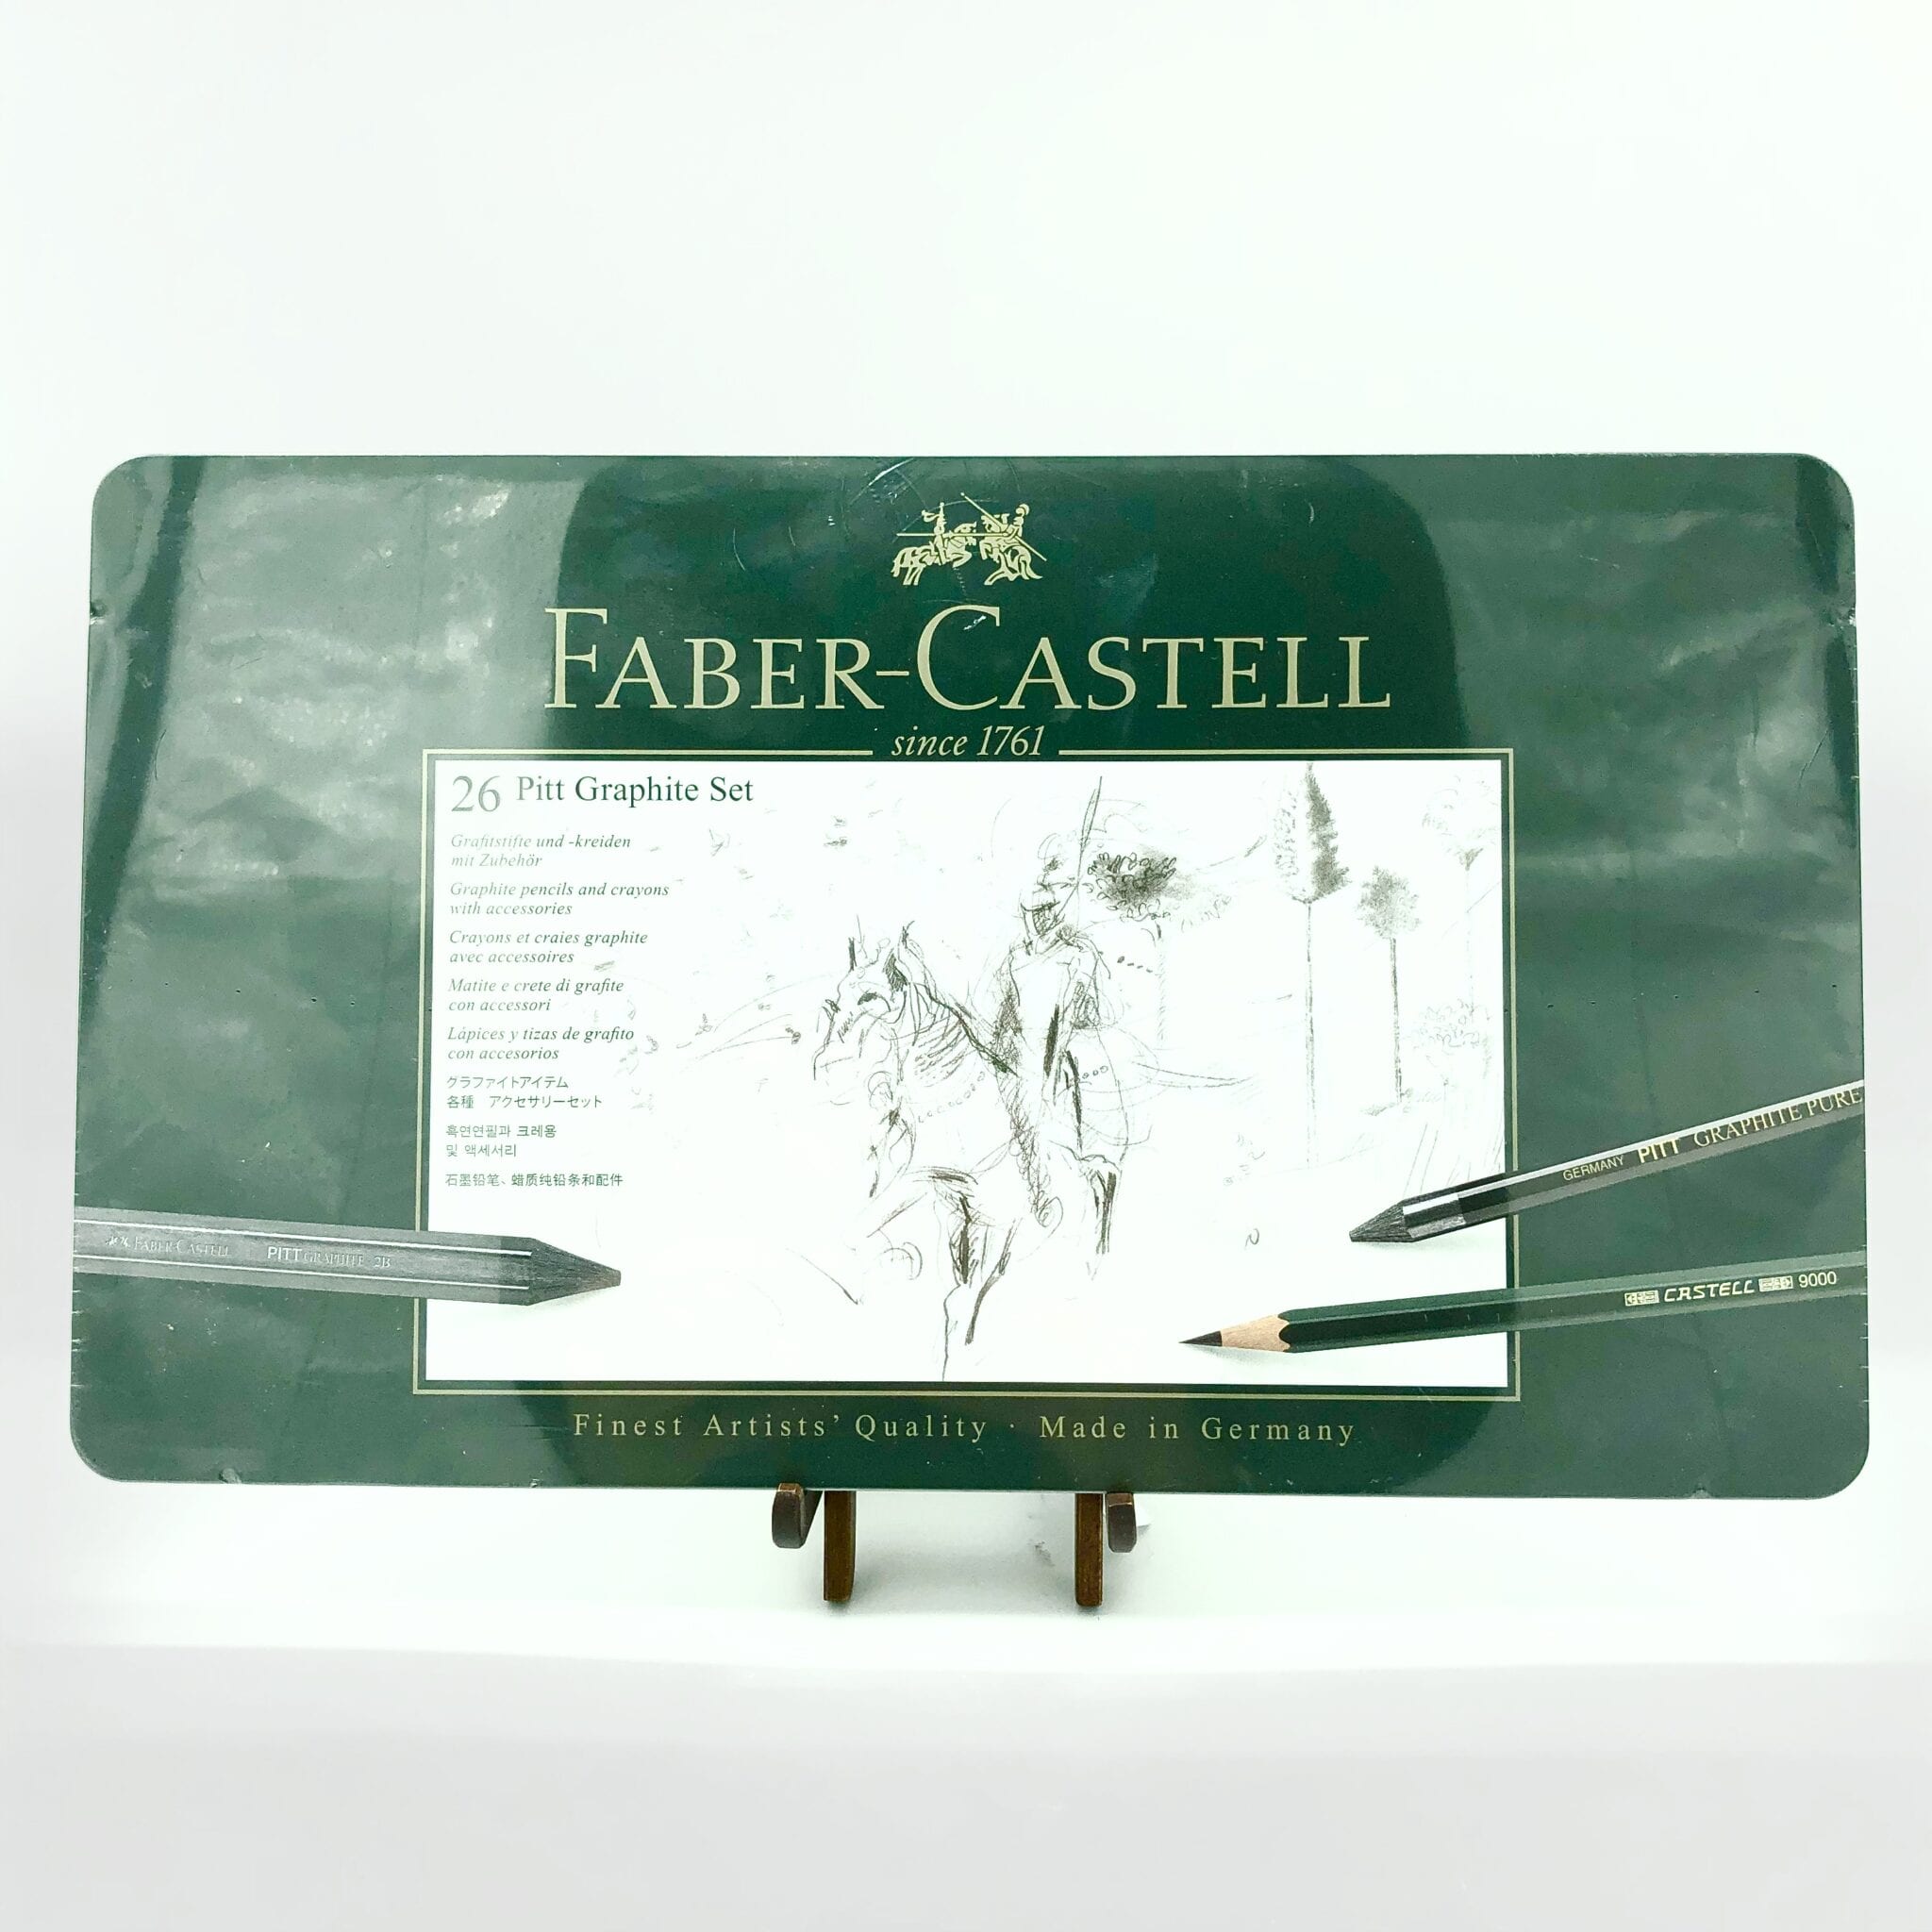 Faber Castell Pitt Graphite Sets | Green & Stone of Chelsea